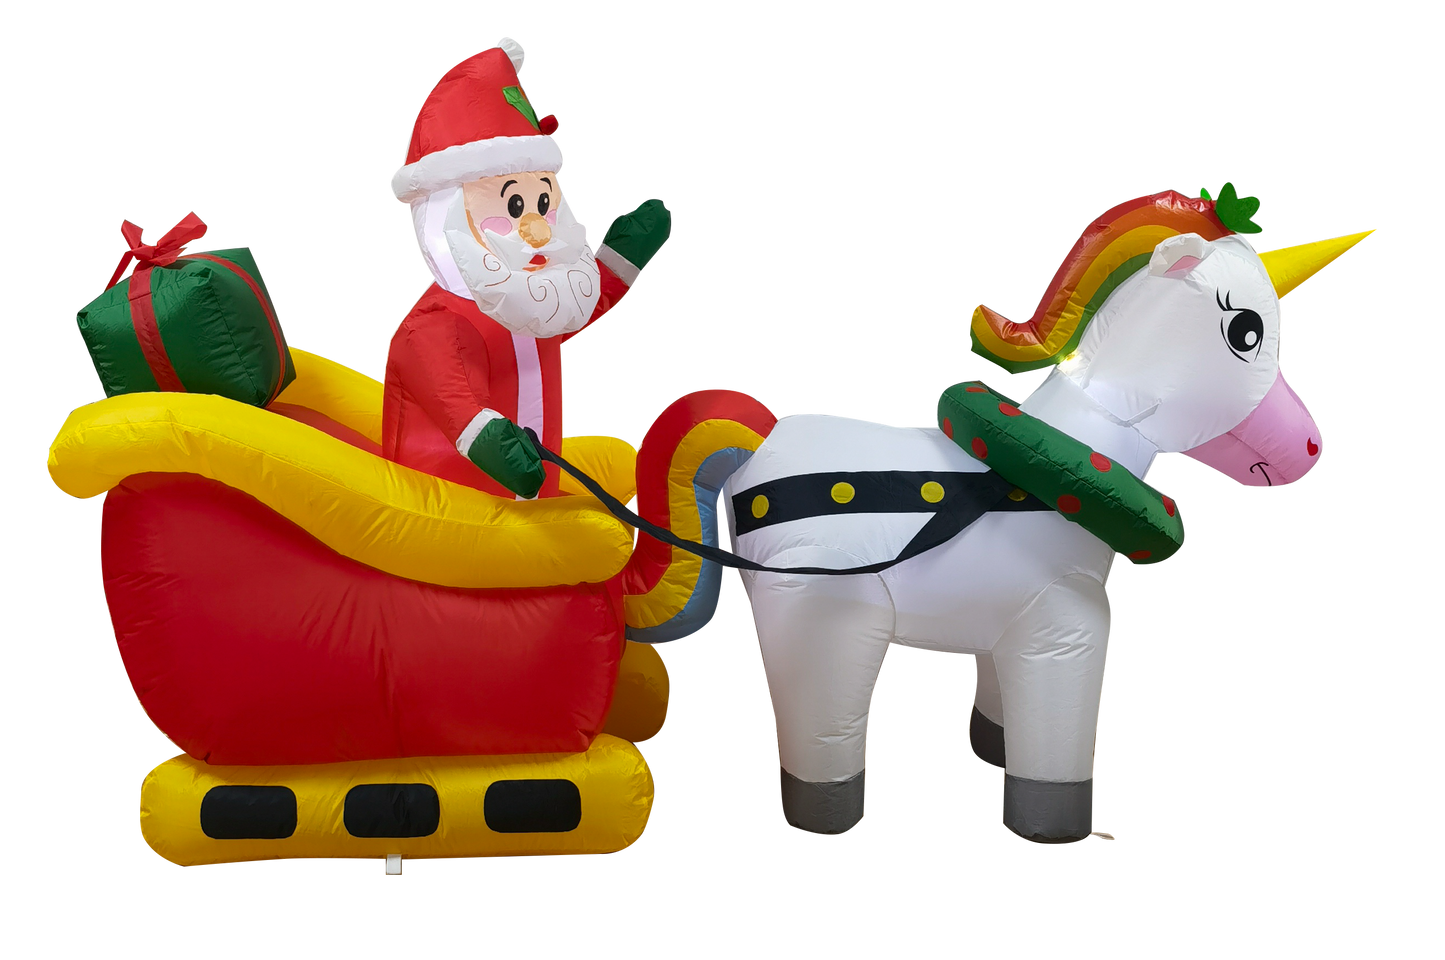 6ft Long Christmas inflatable ride a unicorn costume-Drawn Sleigh